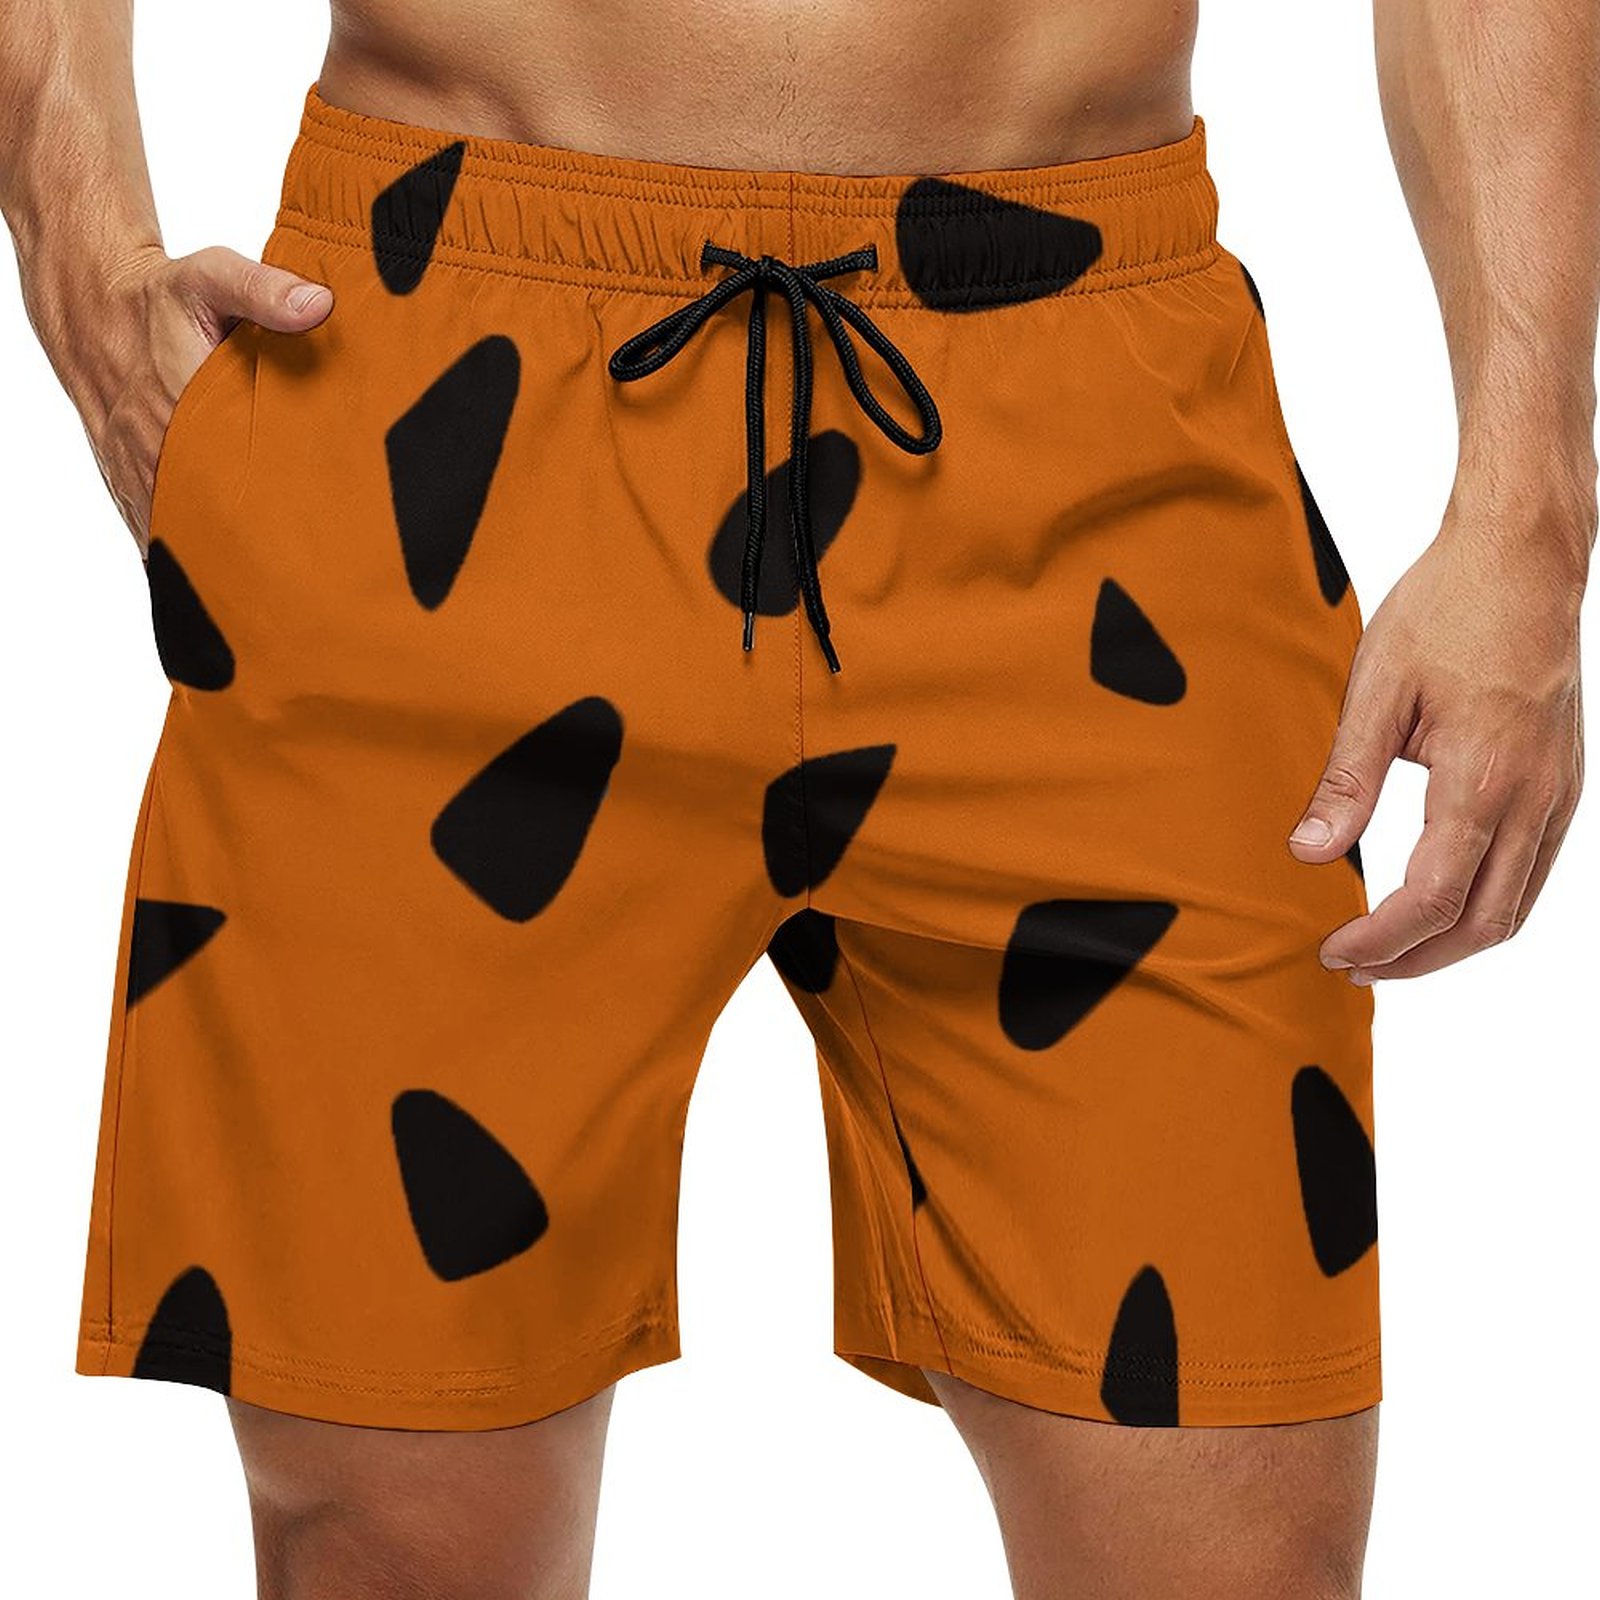 Men's sports fashion beach shorts